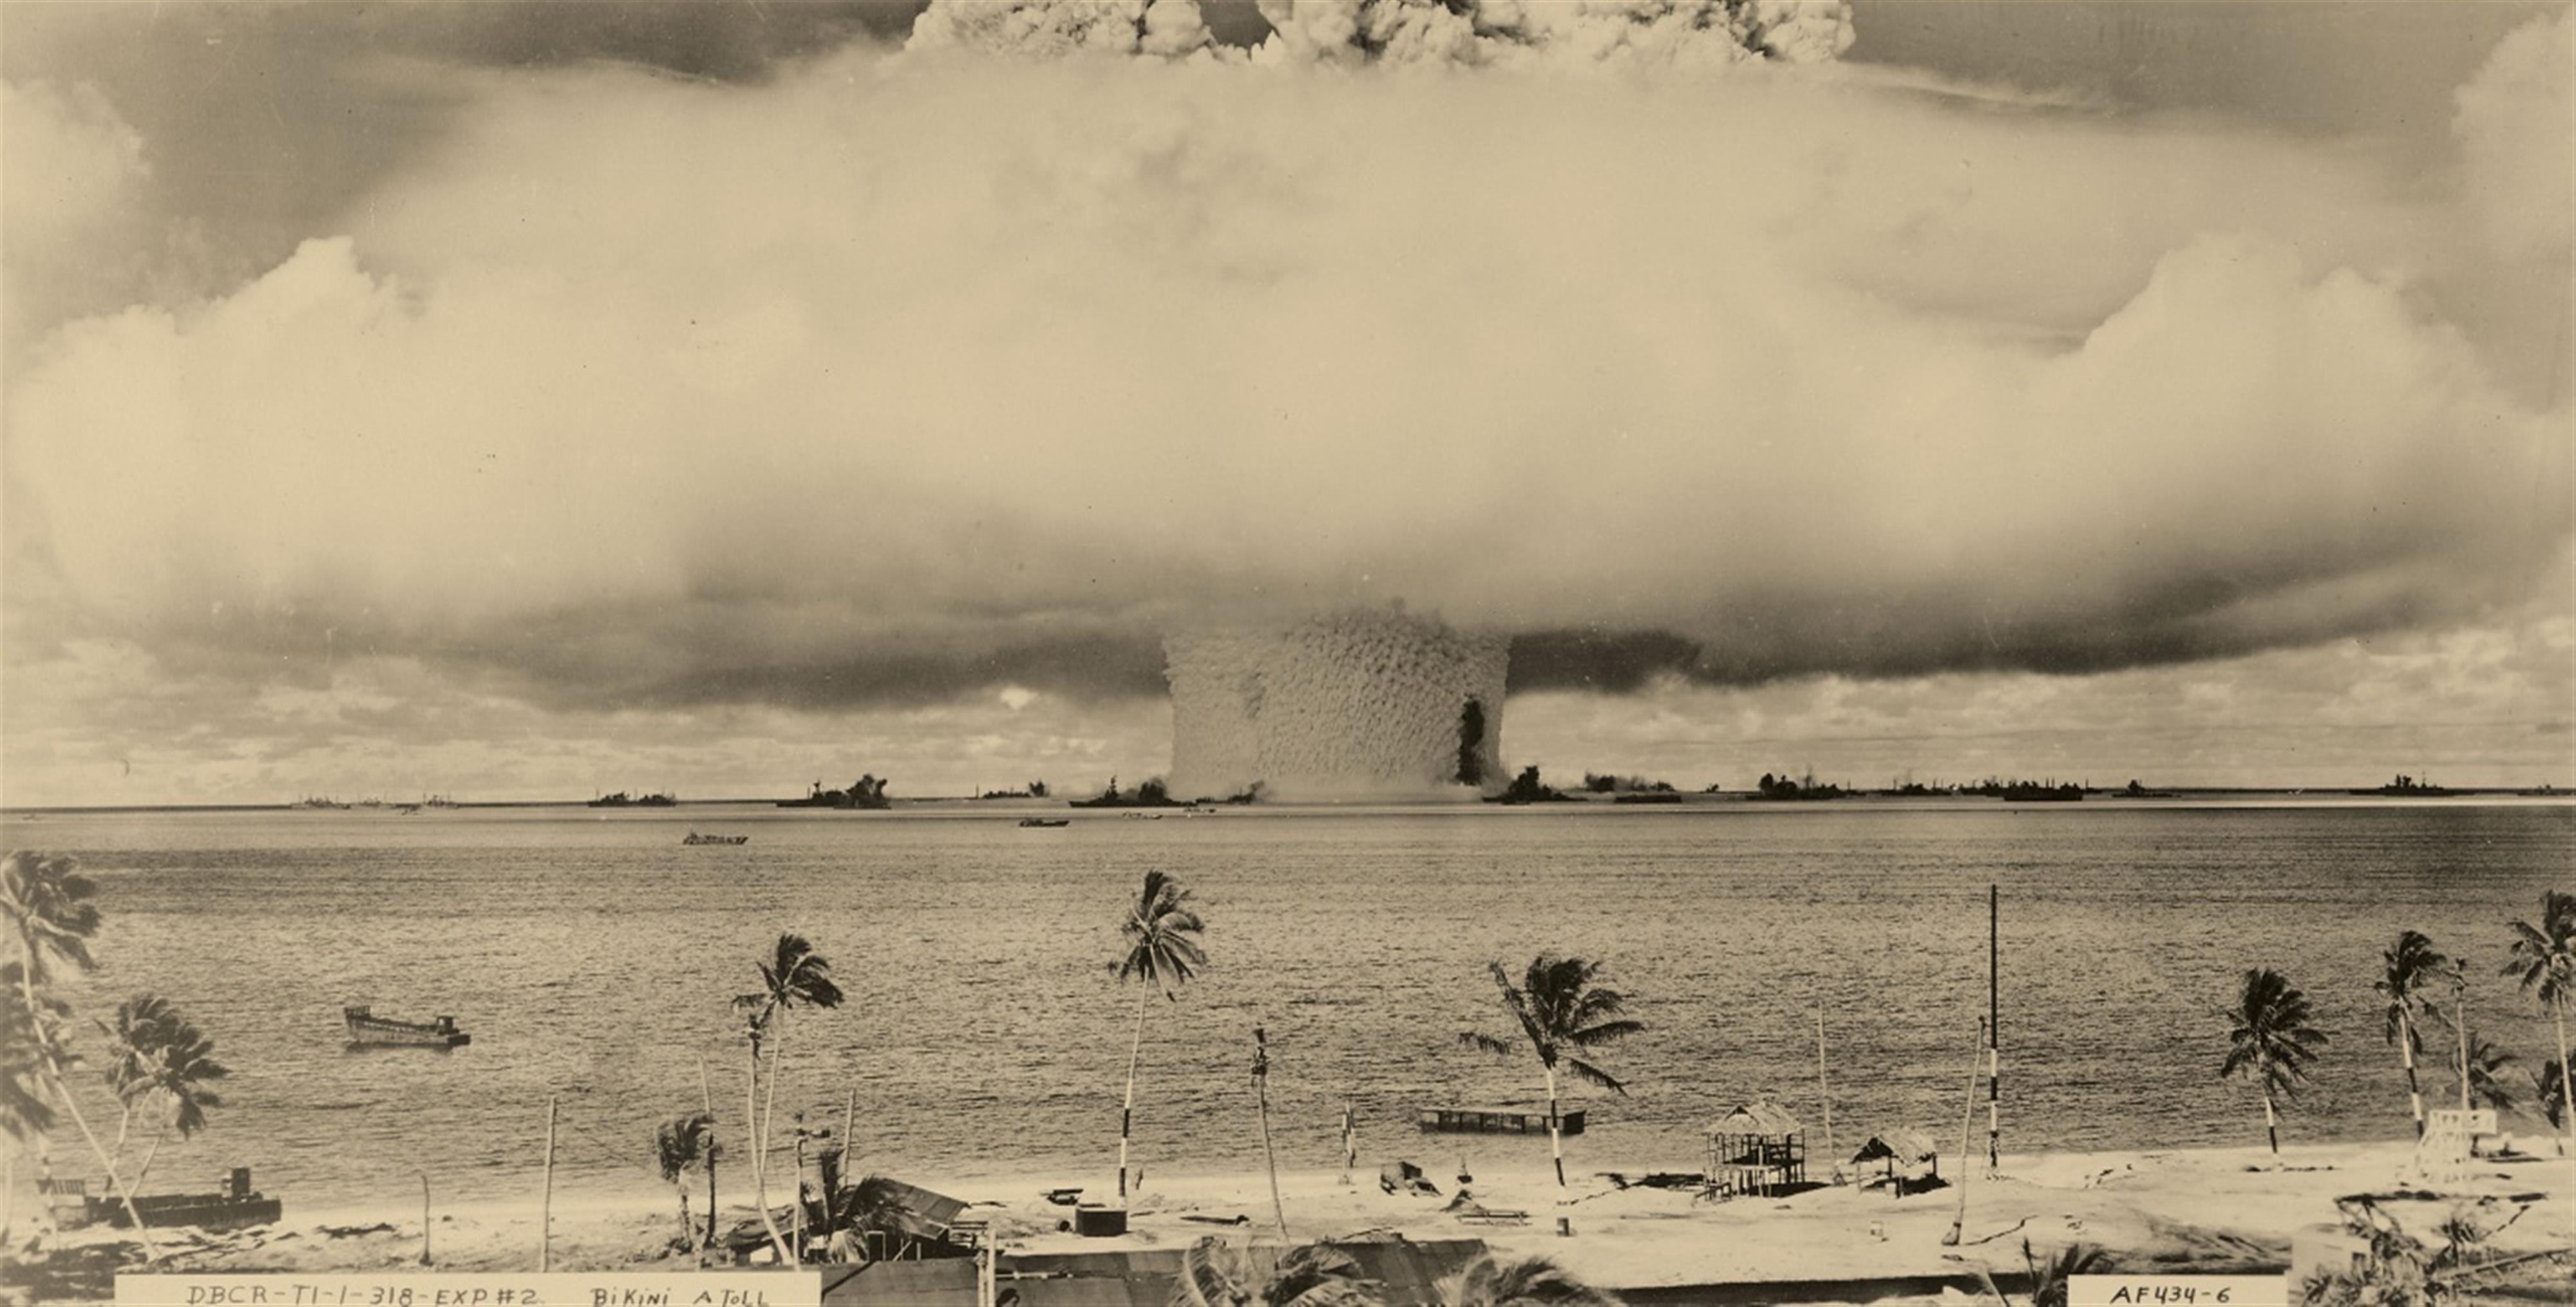 Joint Army Navy Task Force One Photo - Ohne Titel (Underwater Atomic Bomb, Bikini Atoll) - image-2